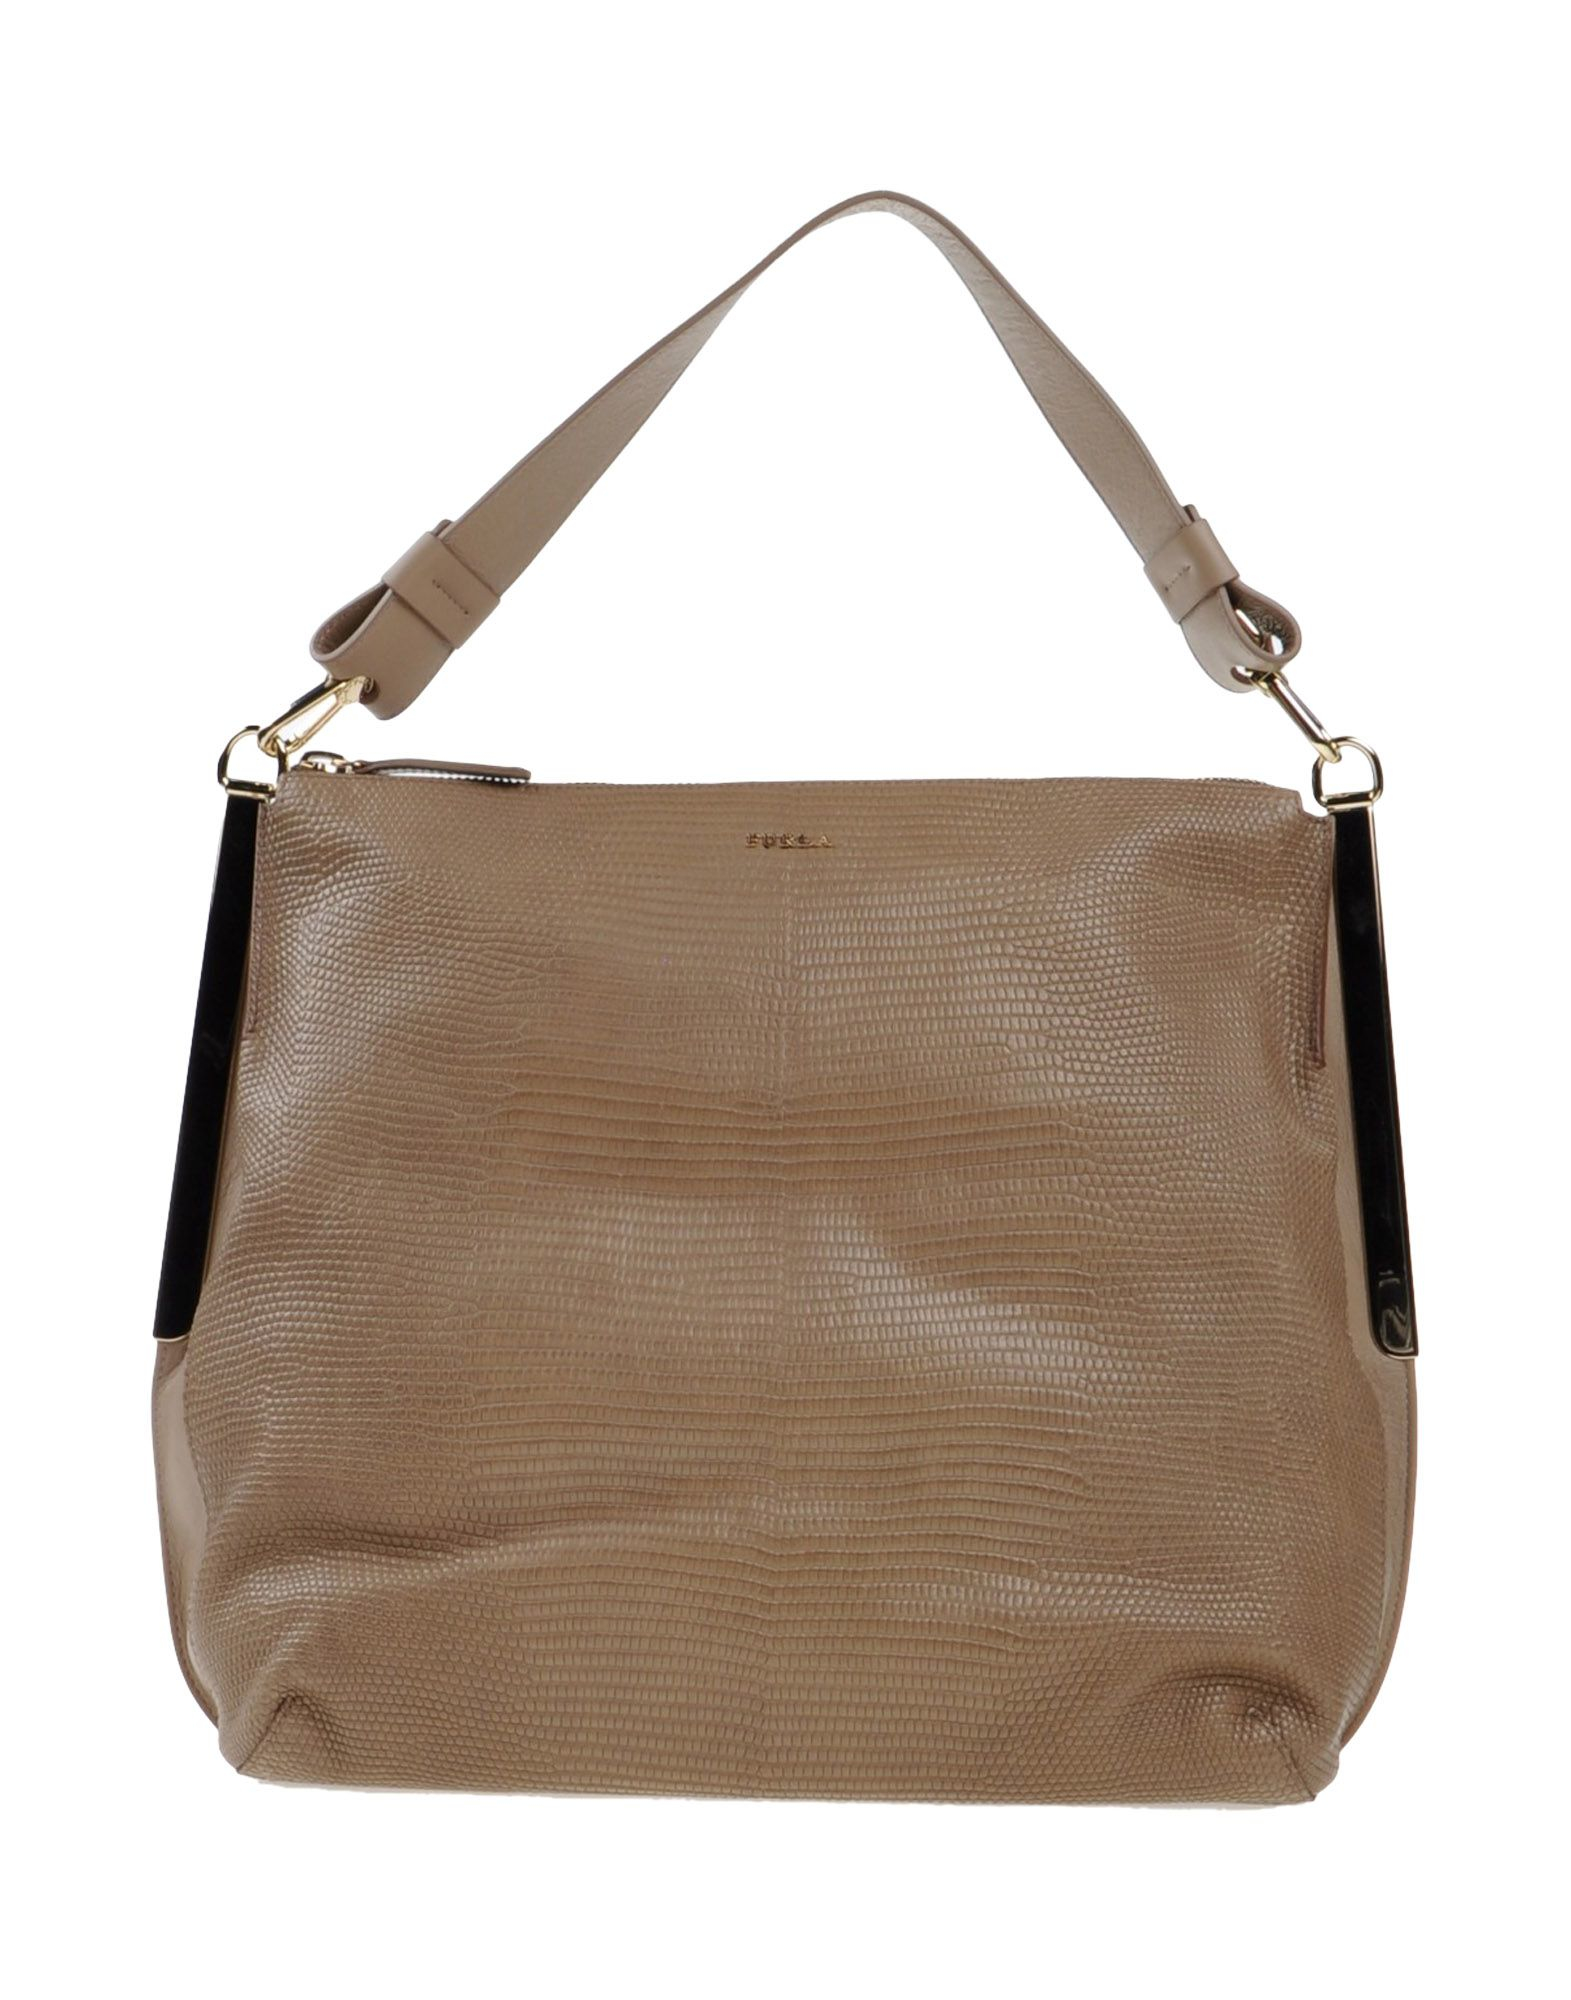 Lyst - Furla Handbag in Natural